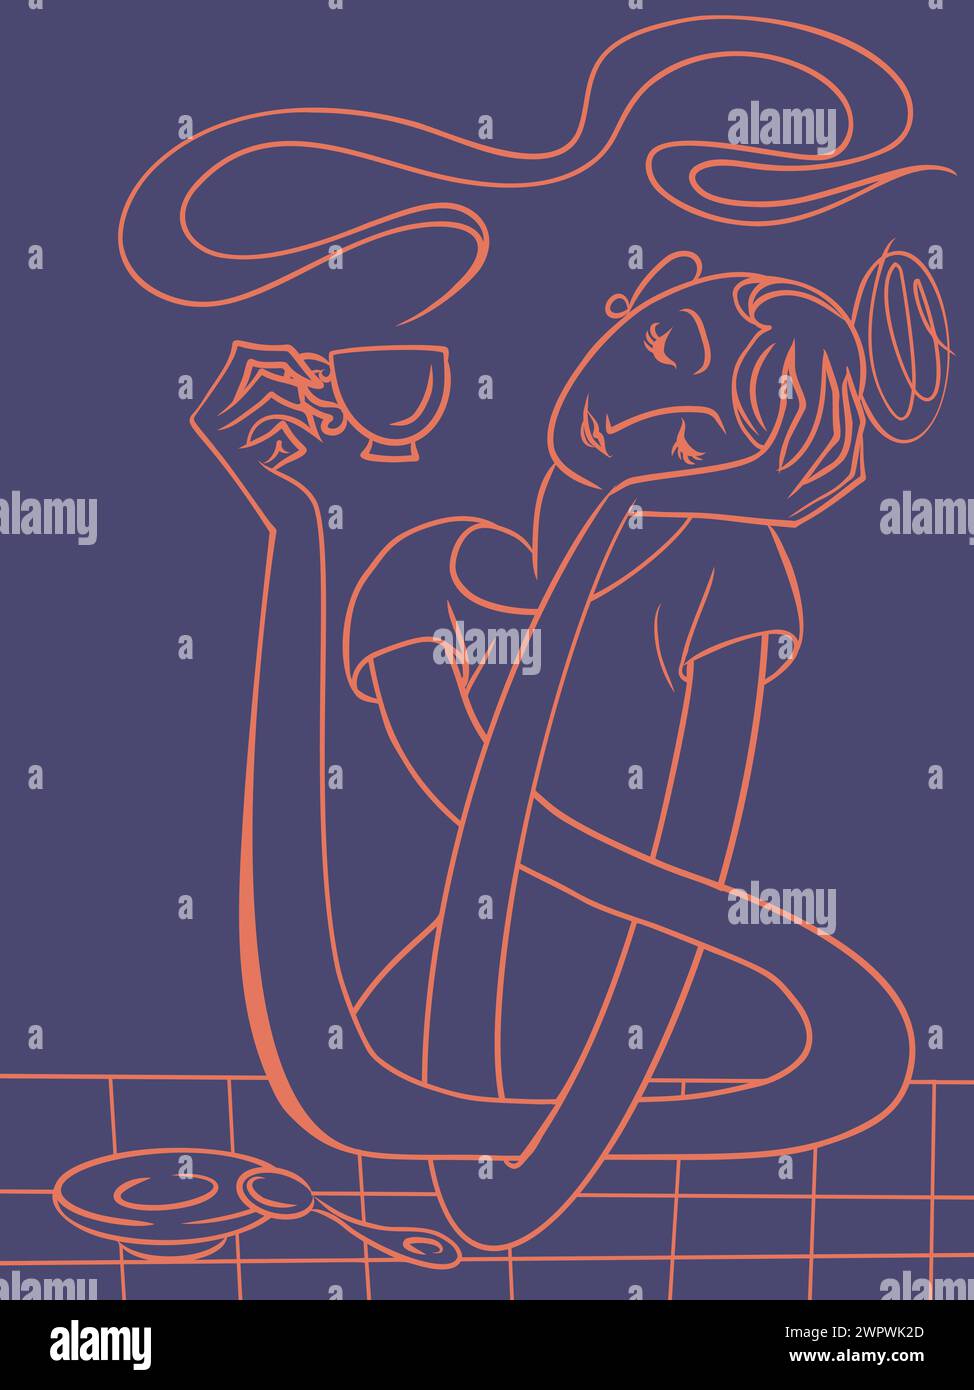 A woman with long arms enjoys a hot drink. Harmony with yourself. Logo for a coffee shop or restaurant. Comic cartoon pop art retro vector illustratio Stock Vector